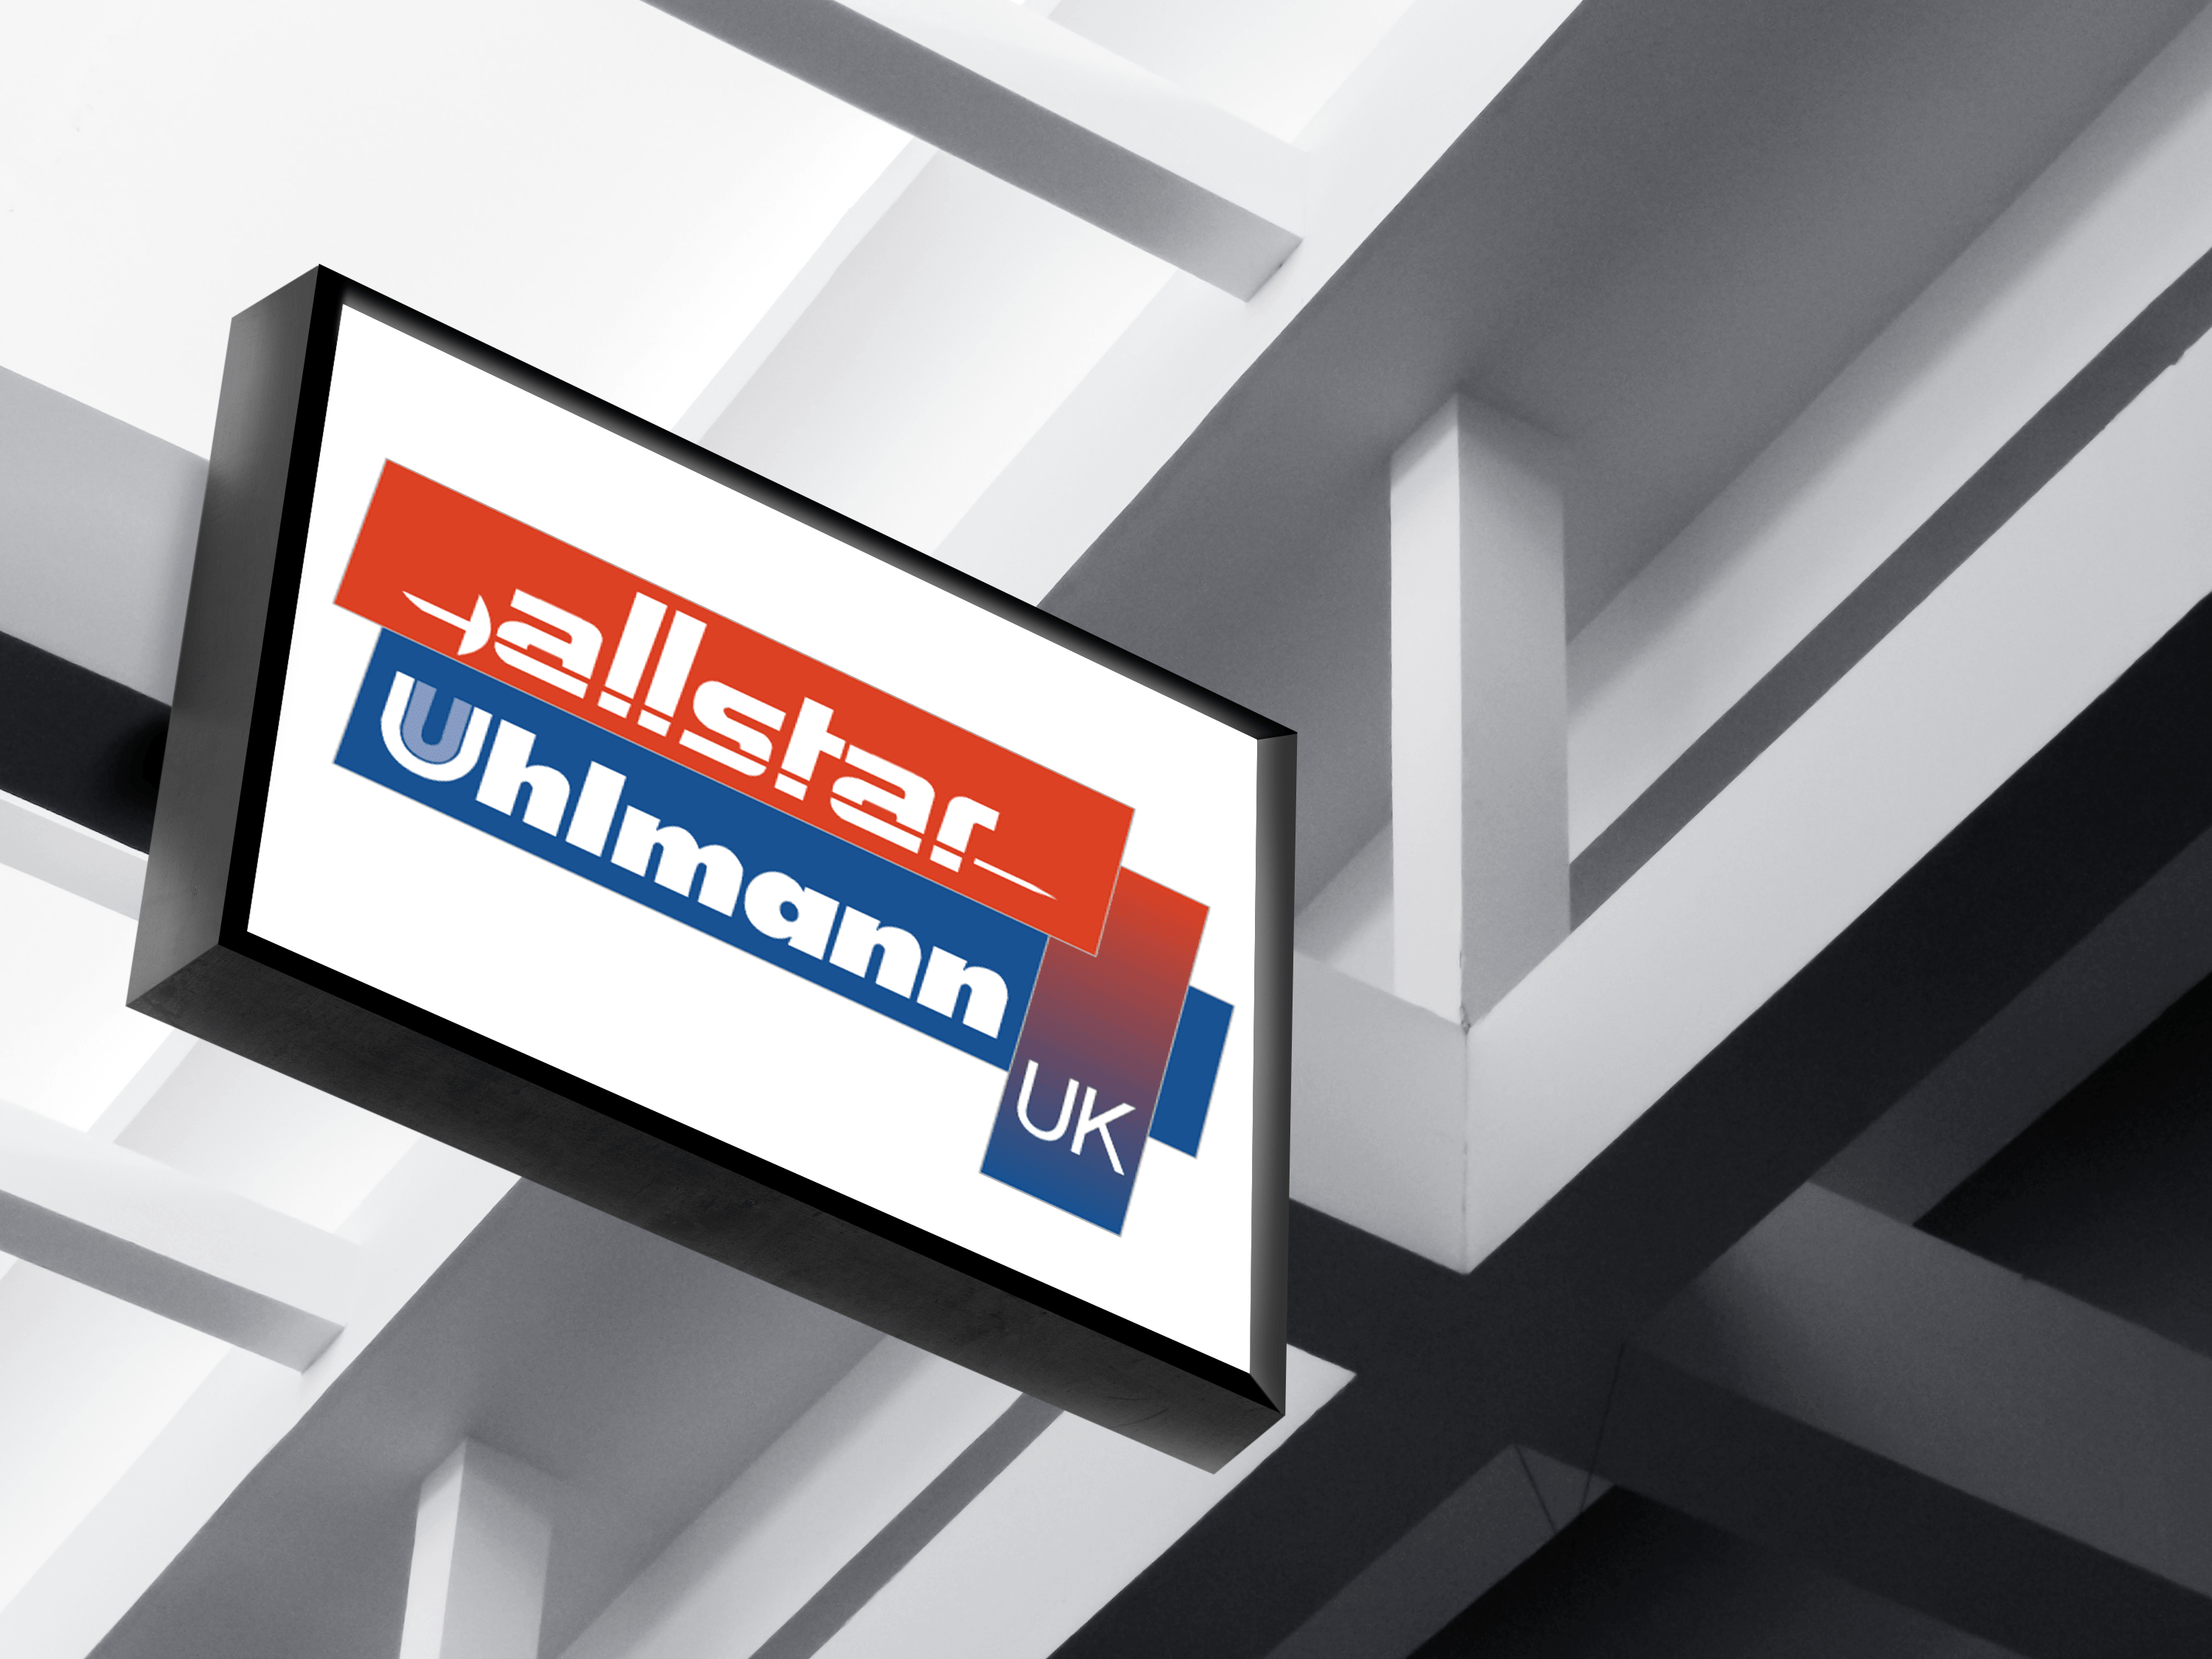 Allstar Uhlmann logo on a shop sign